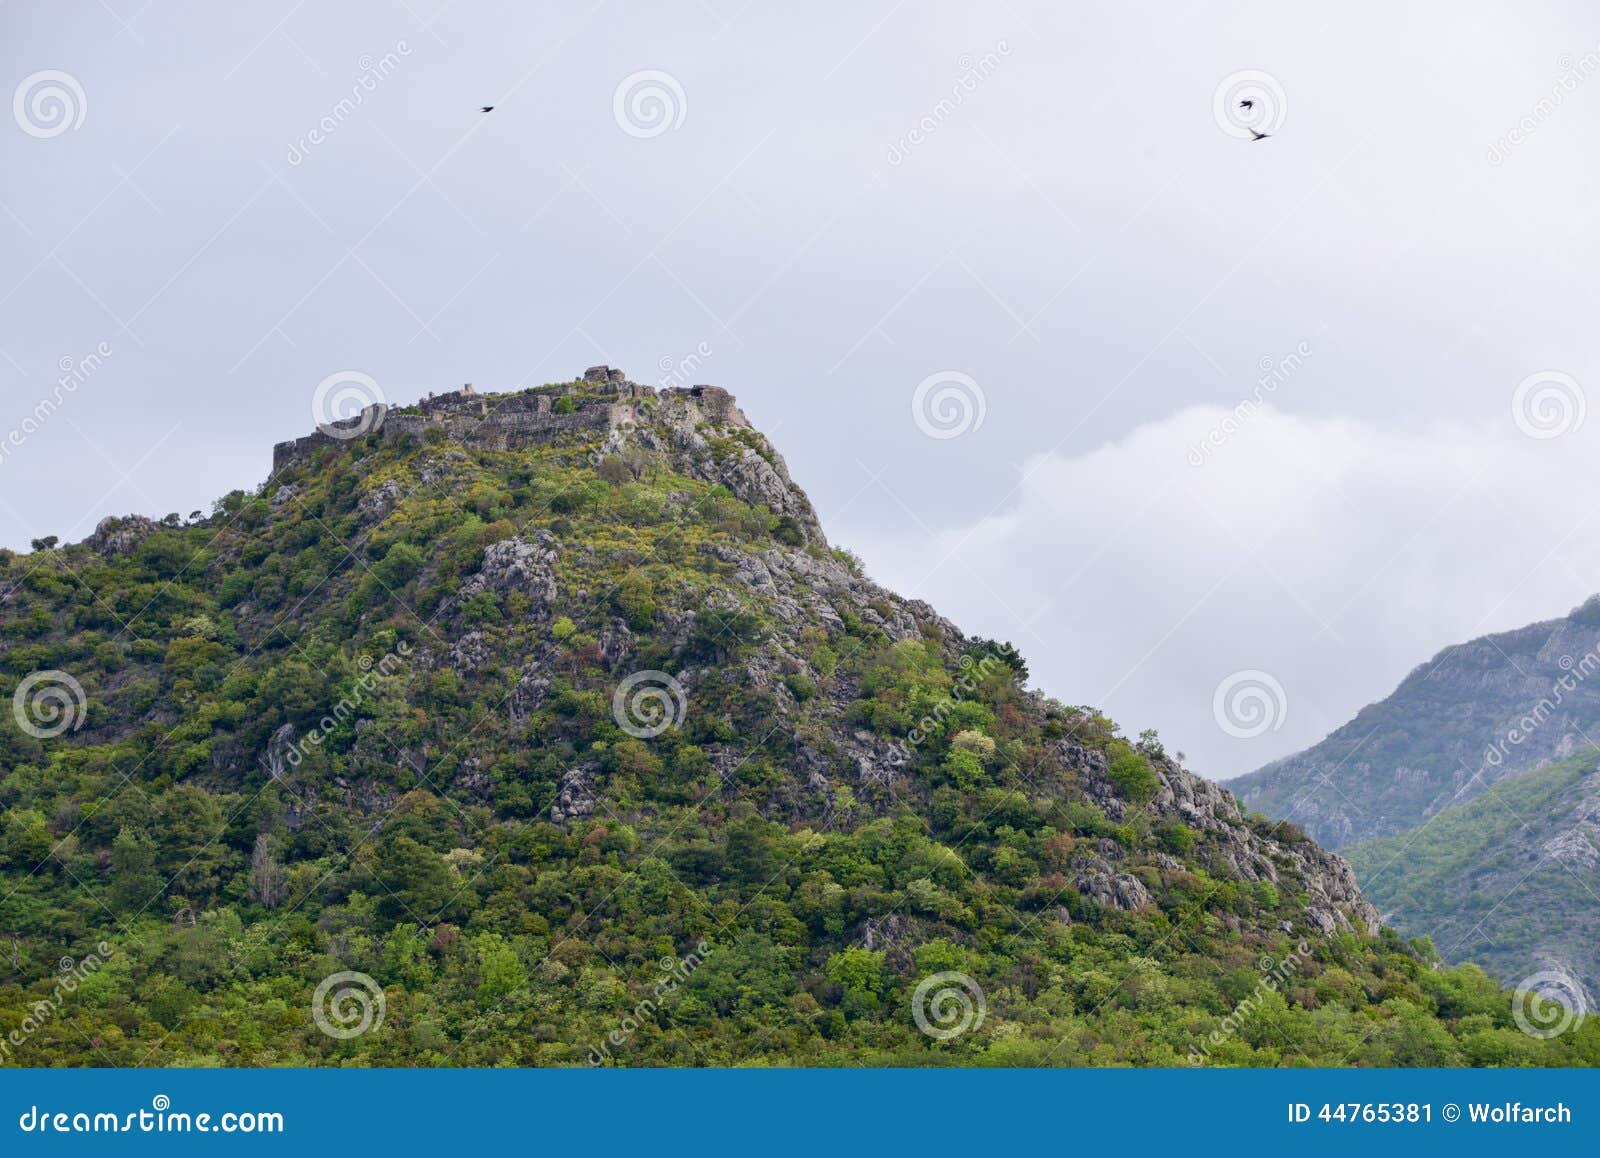 haj-nehaj fortress above sutomore, montenegro